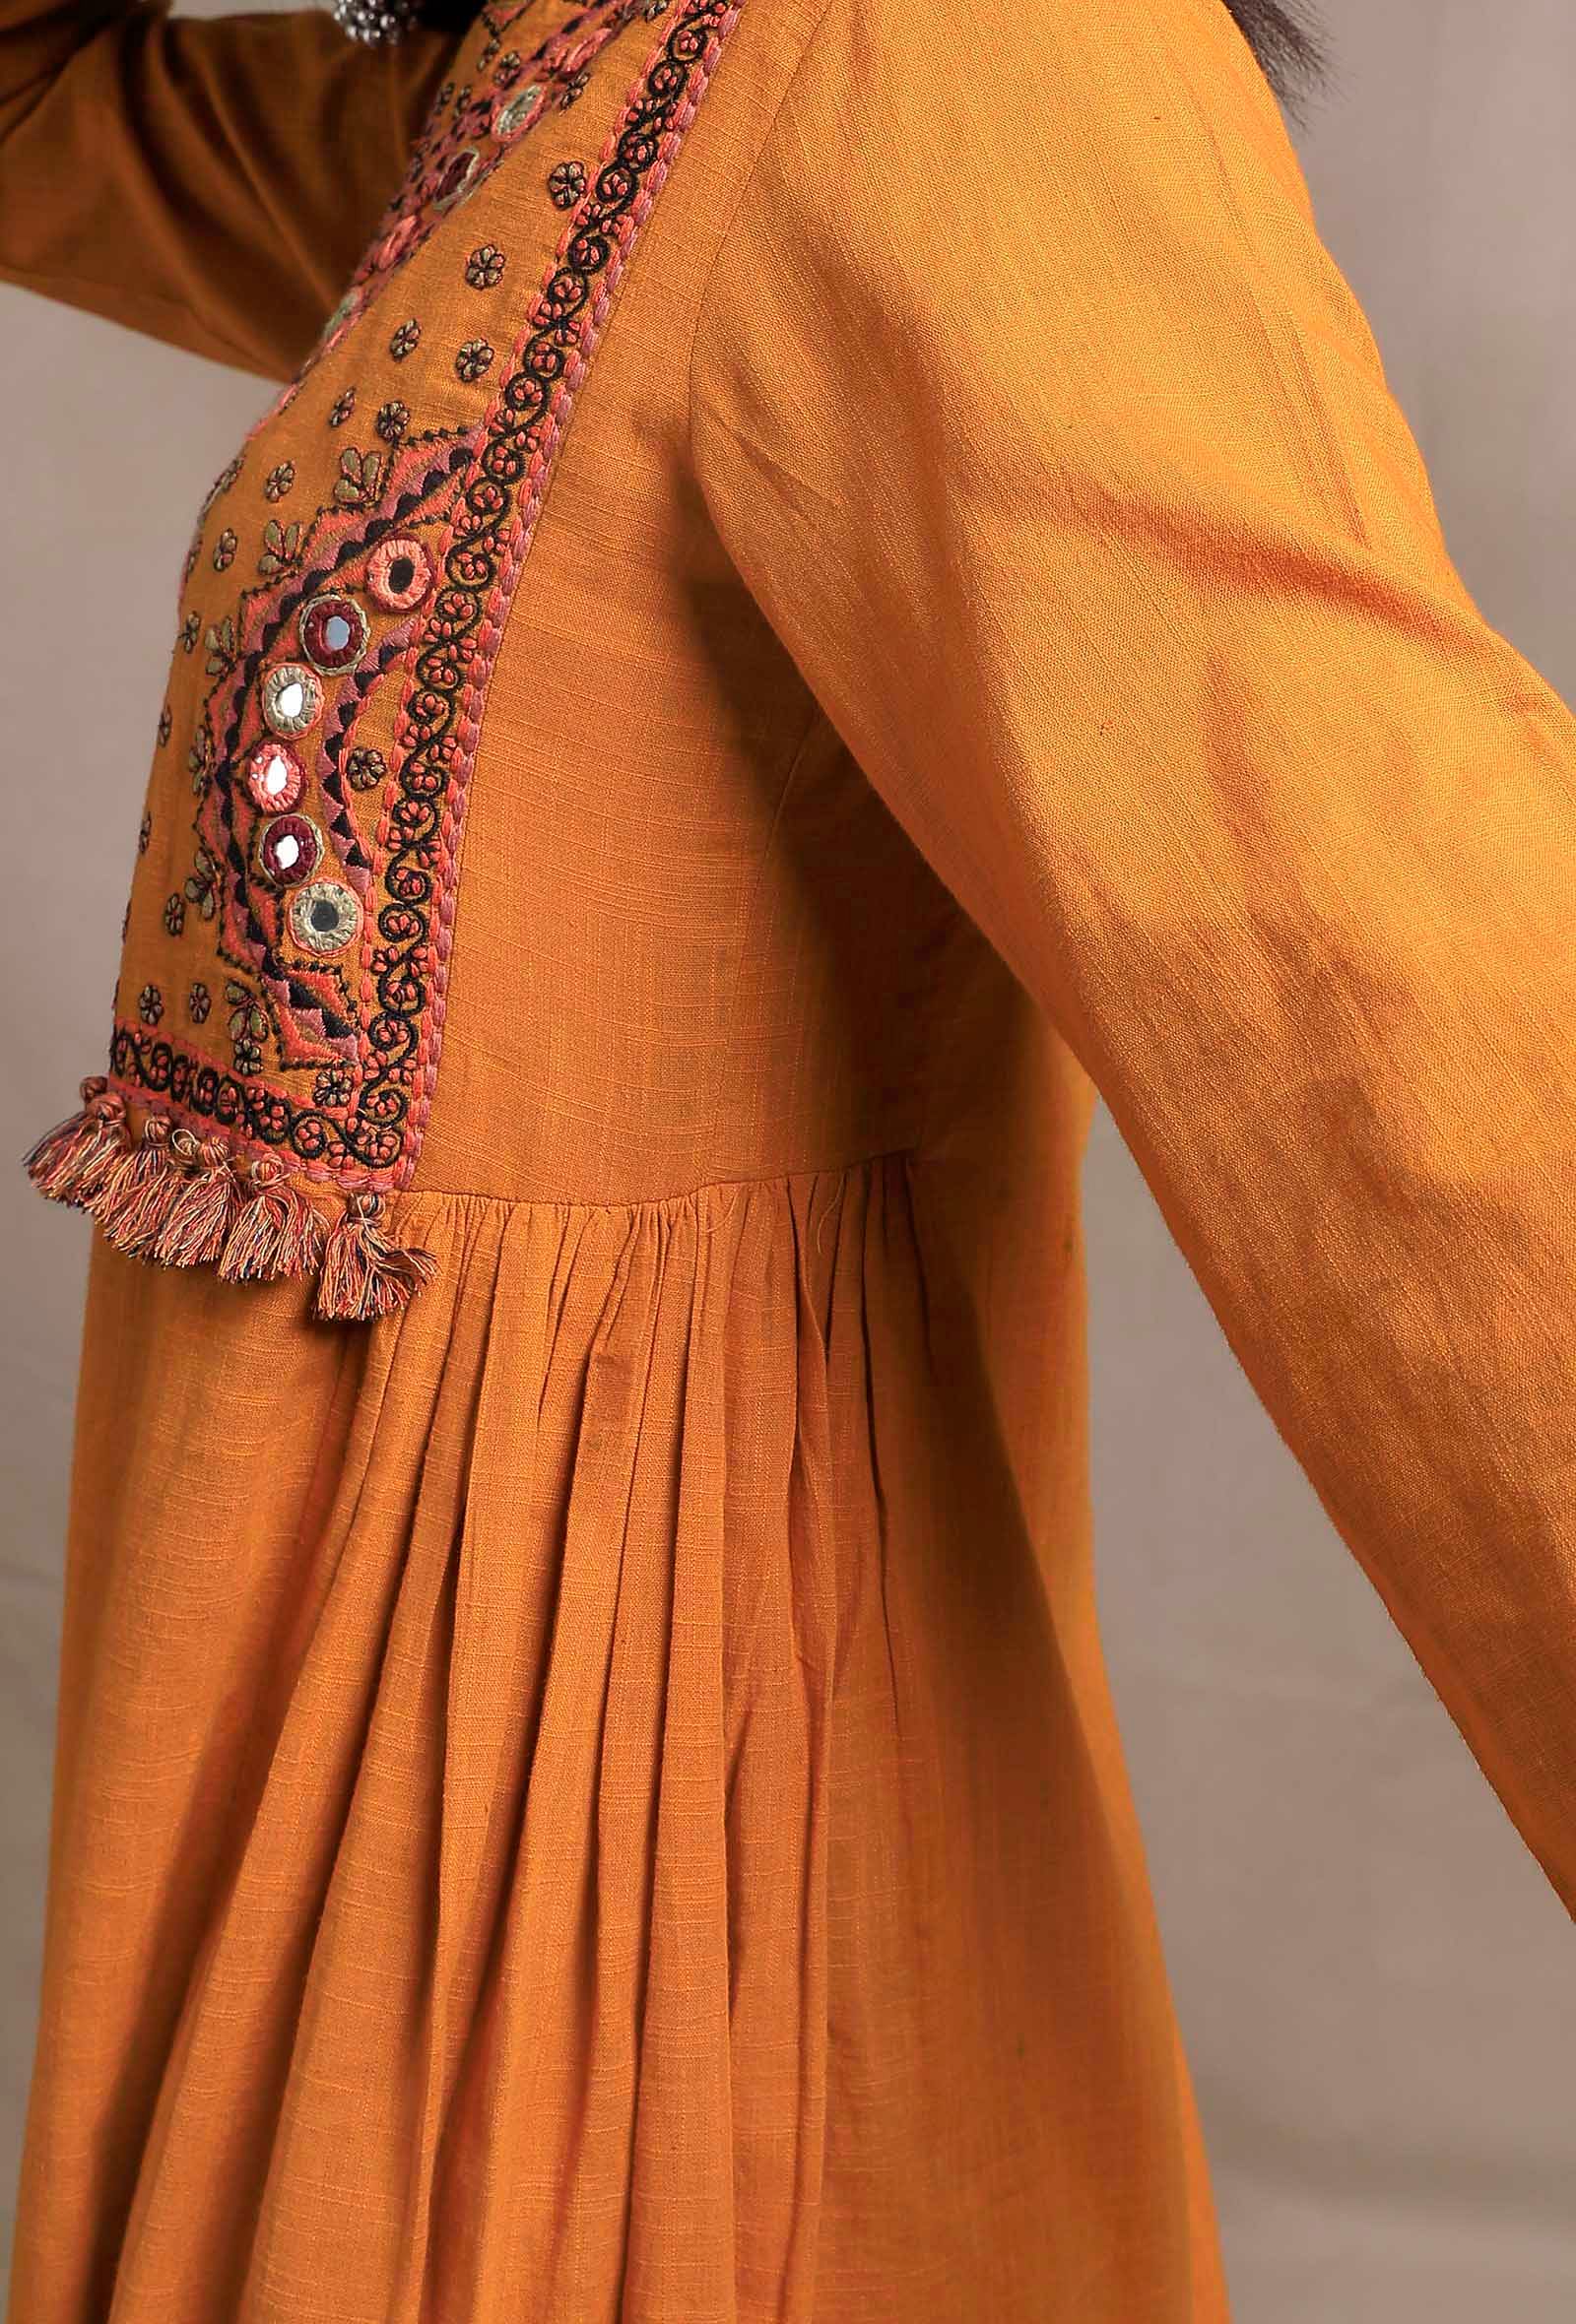 Shop Gold gathered dress | The Secret Label | Kalamkari dresses, Long kurti  designs, Kurti designs party wear